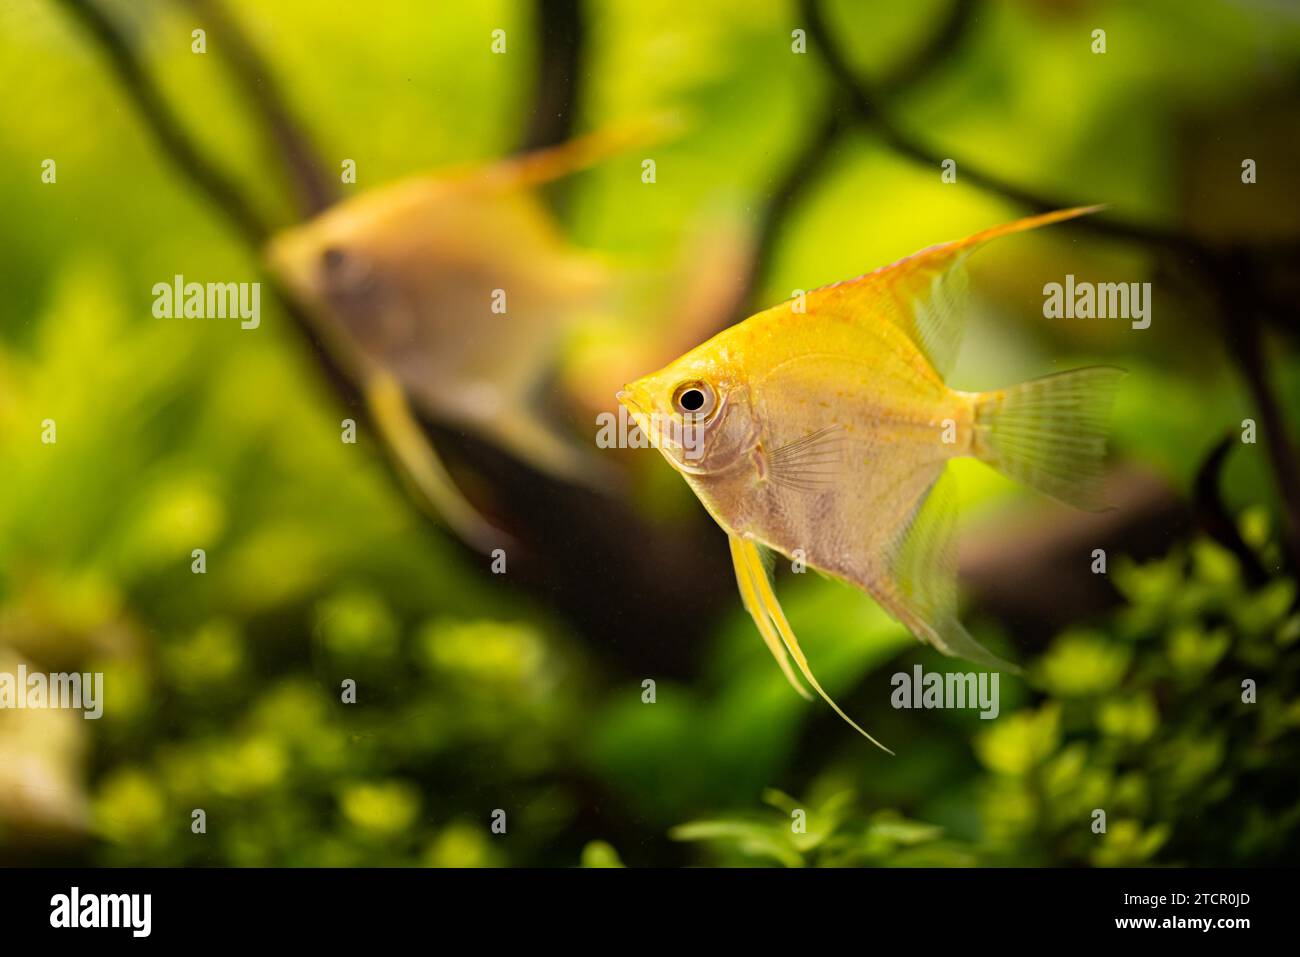 Golden Pterophyllum Scalare in aqarium water, yellow angelfish. Concept Stock Photo